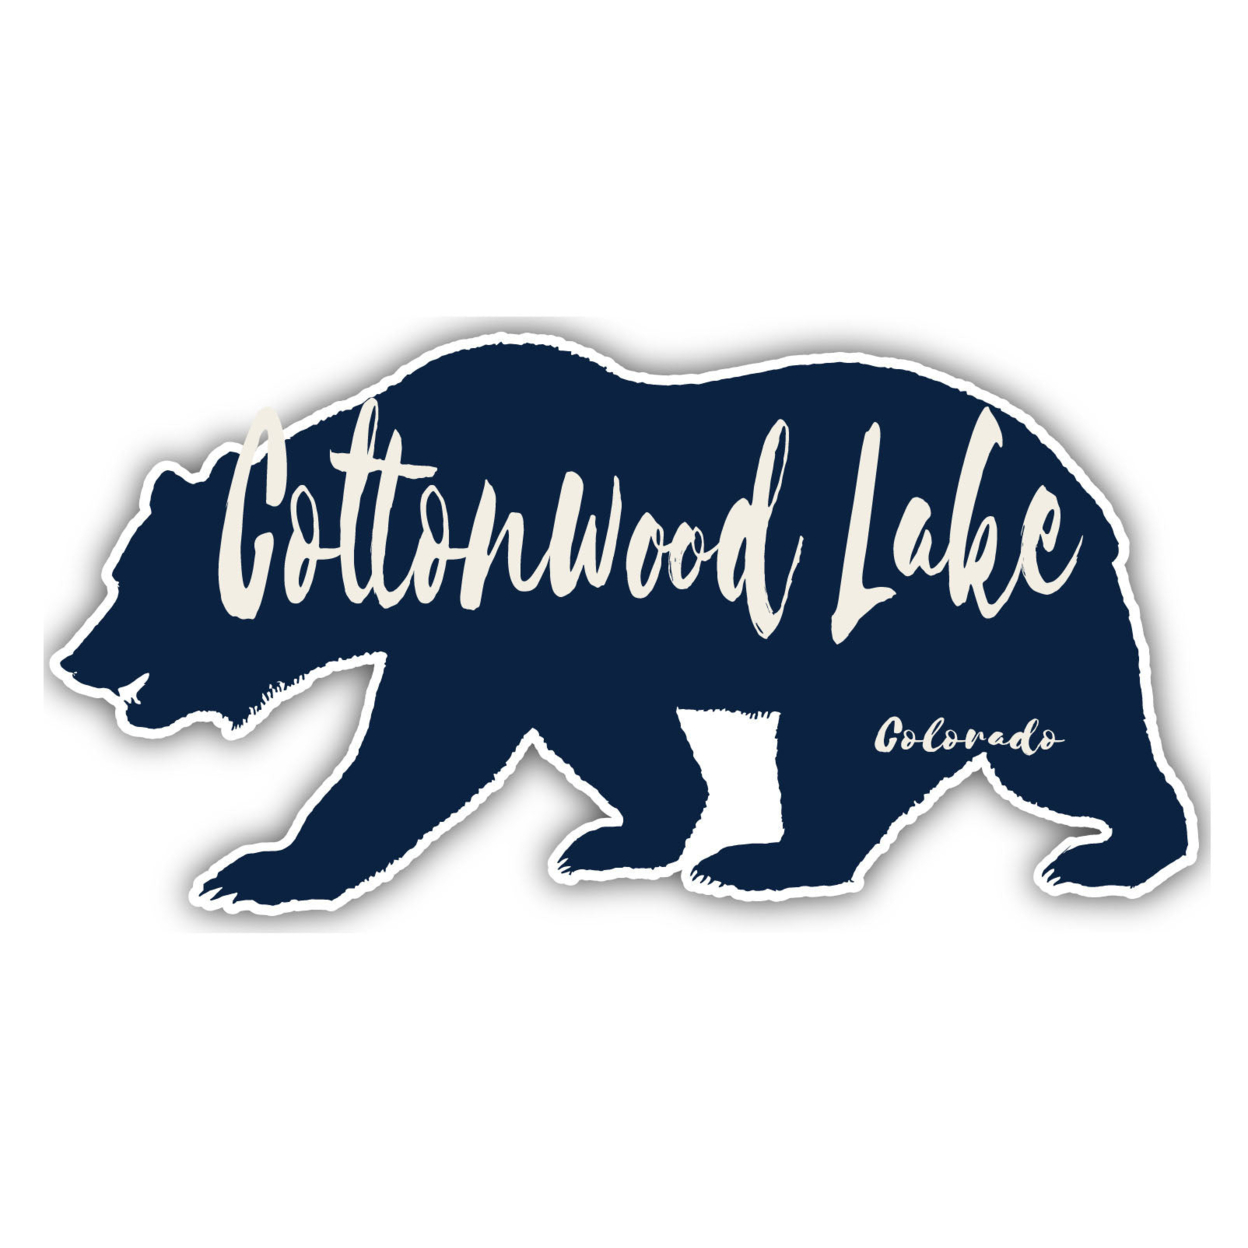 Cottonwood Lake Colorado Souvenir Decorative Stickers (Choose Theme And Size) - Single Unit, 2-Inch, Camp Life